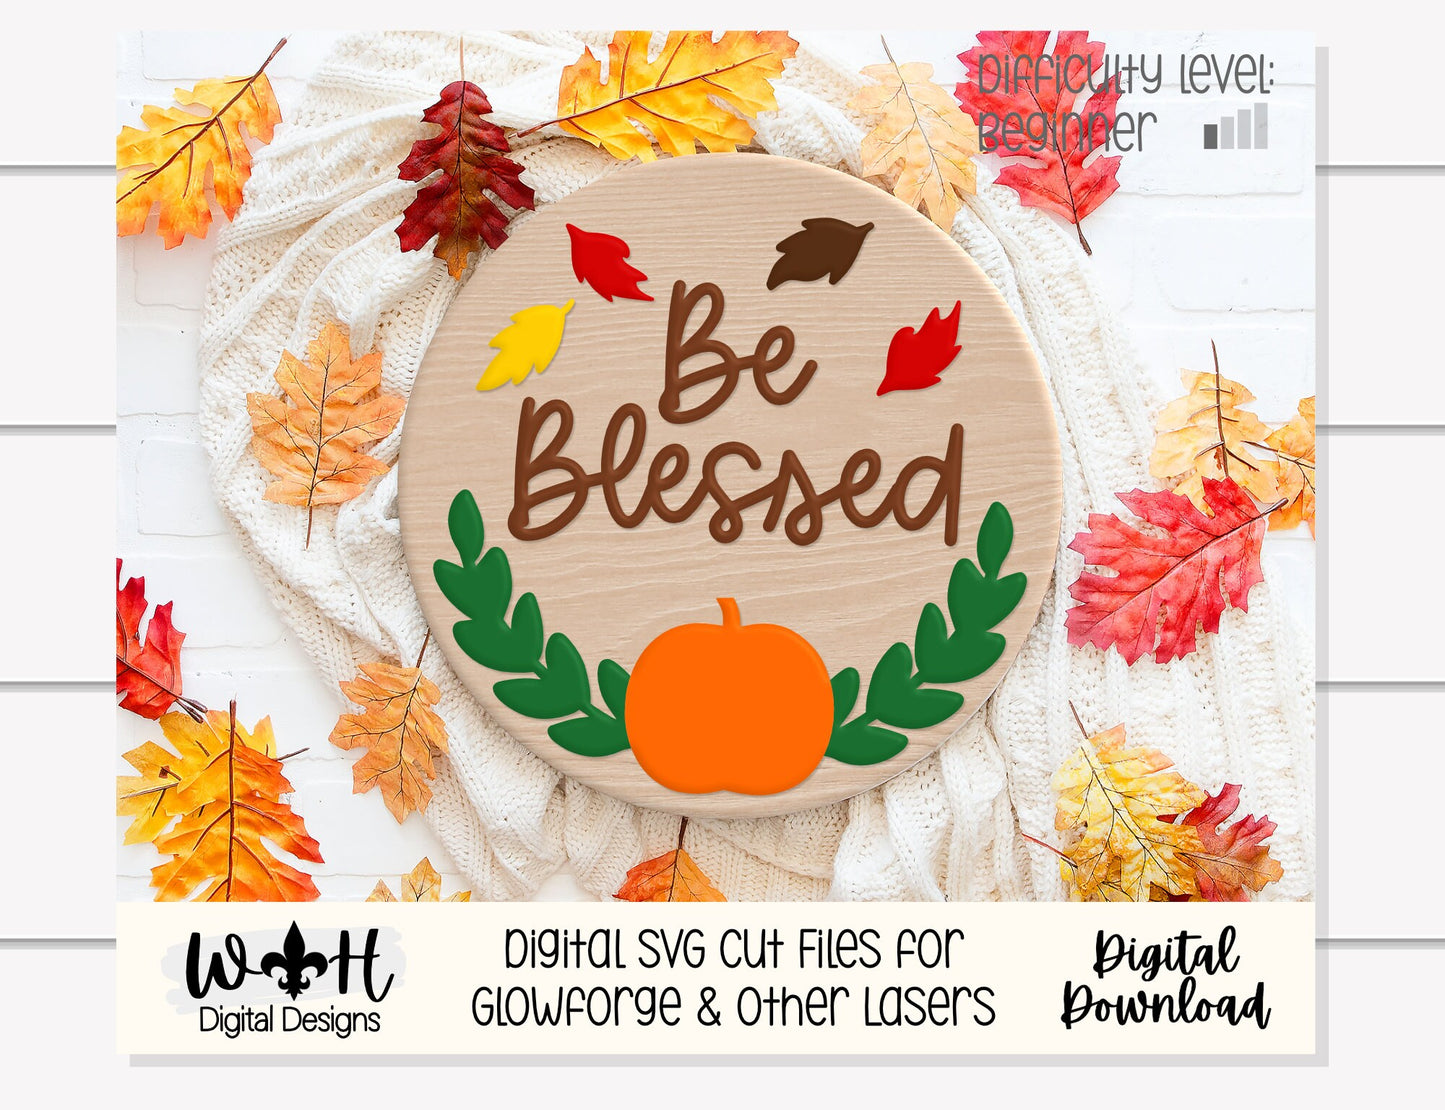 Be Blessed Pumpkin and Greenery Door Hanger - Seasonal Sign Making and DIY Kits - Cut File For Glowforge Laser - Digital SVG File